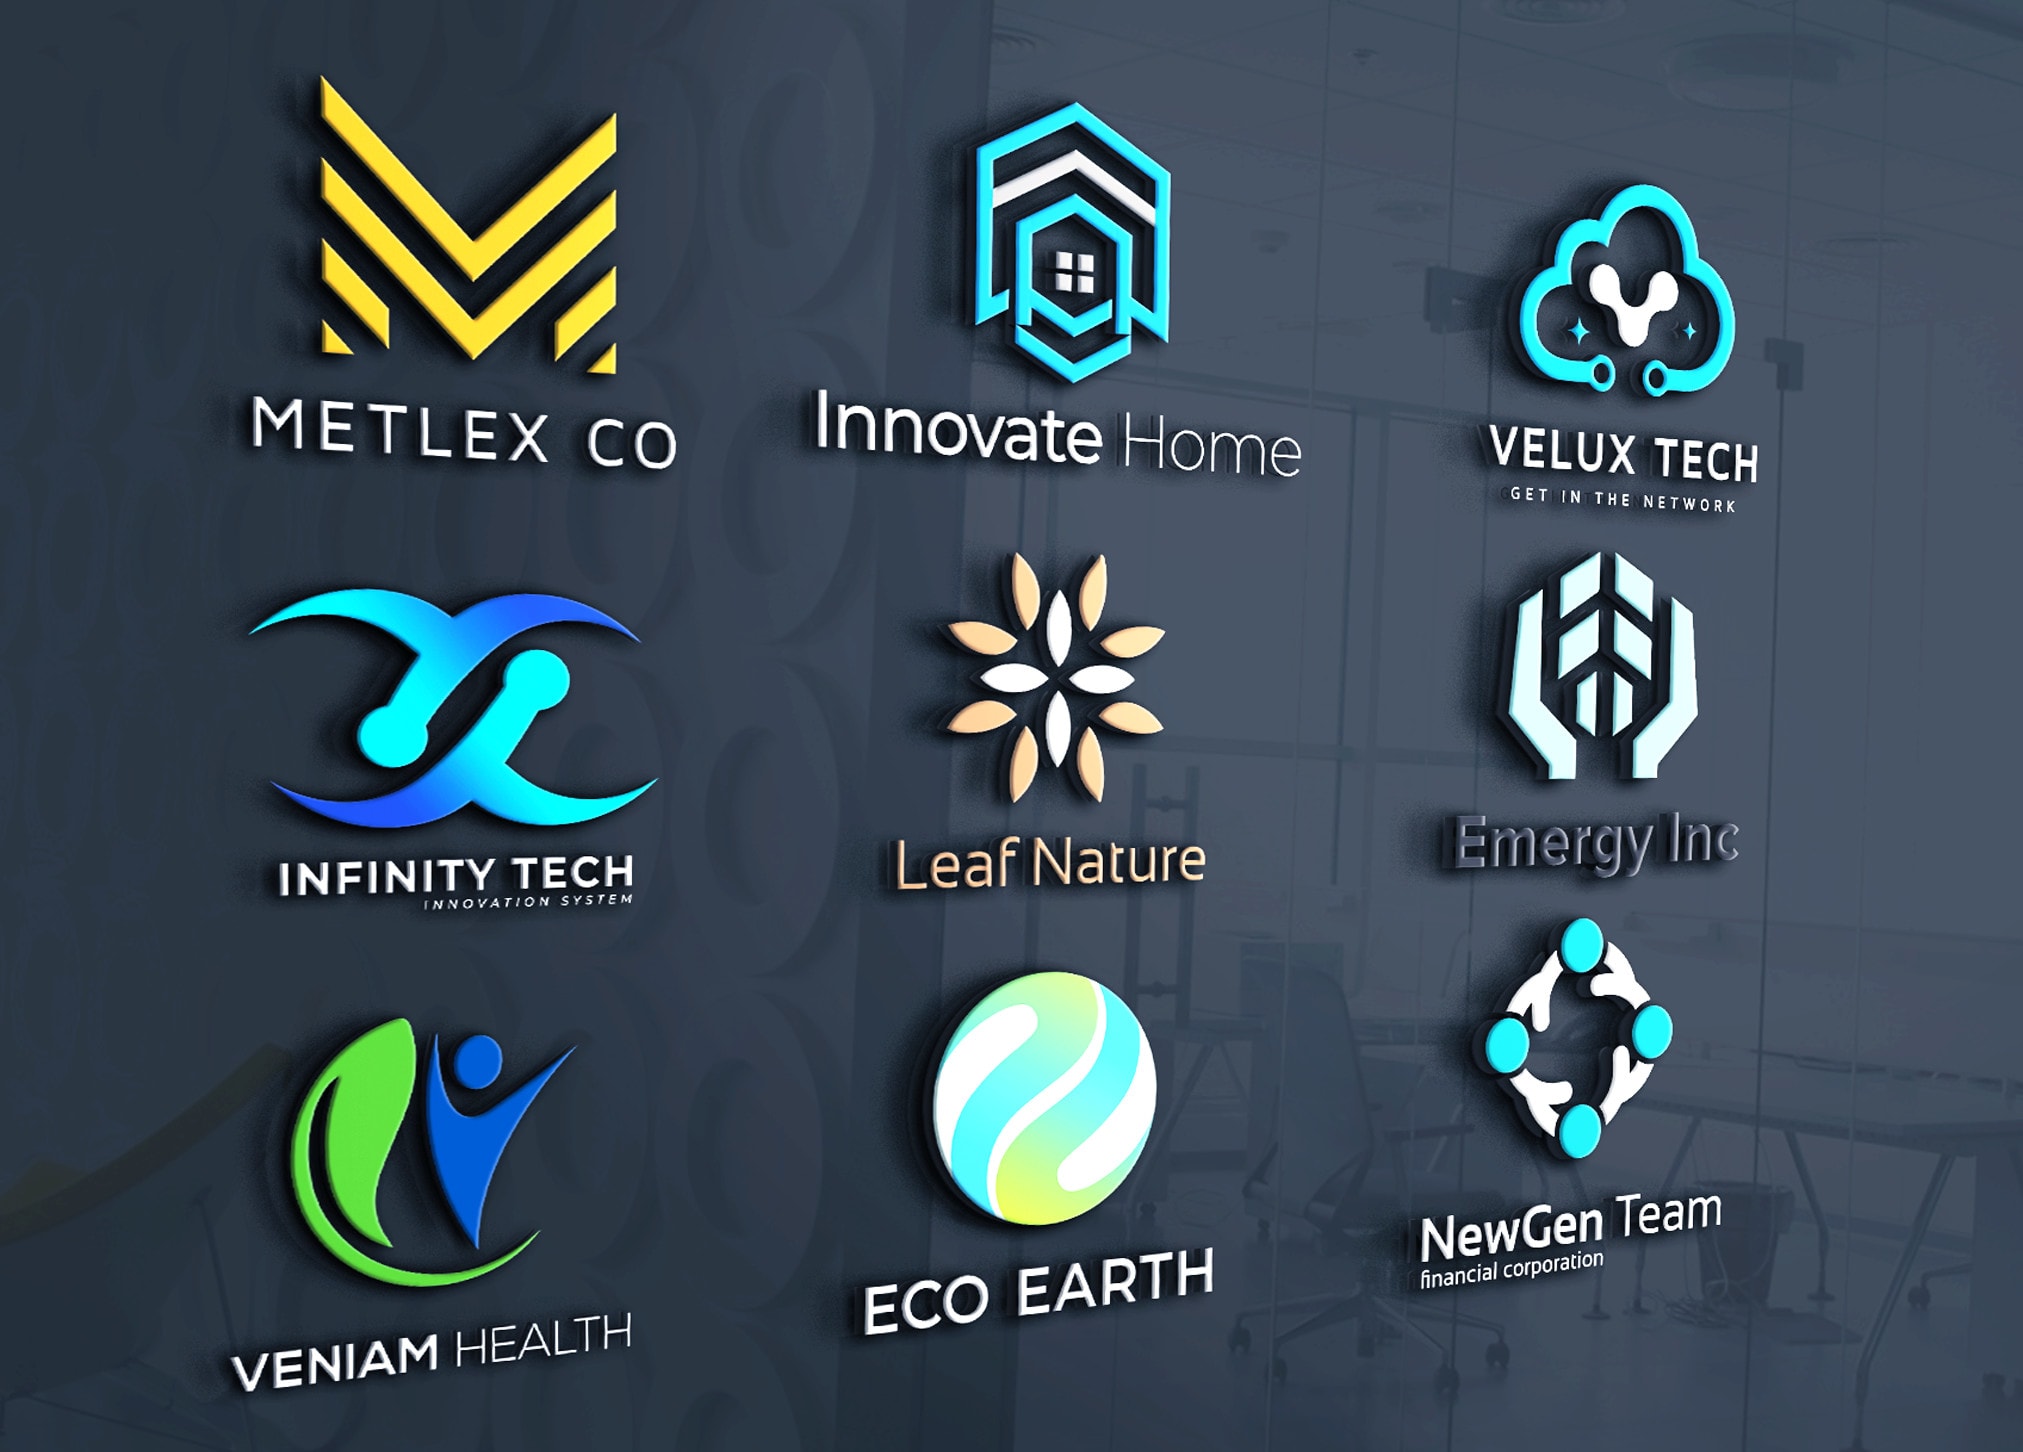 letter based company logo maker